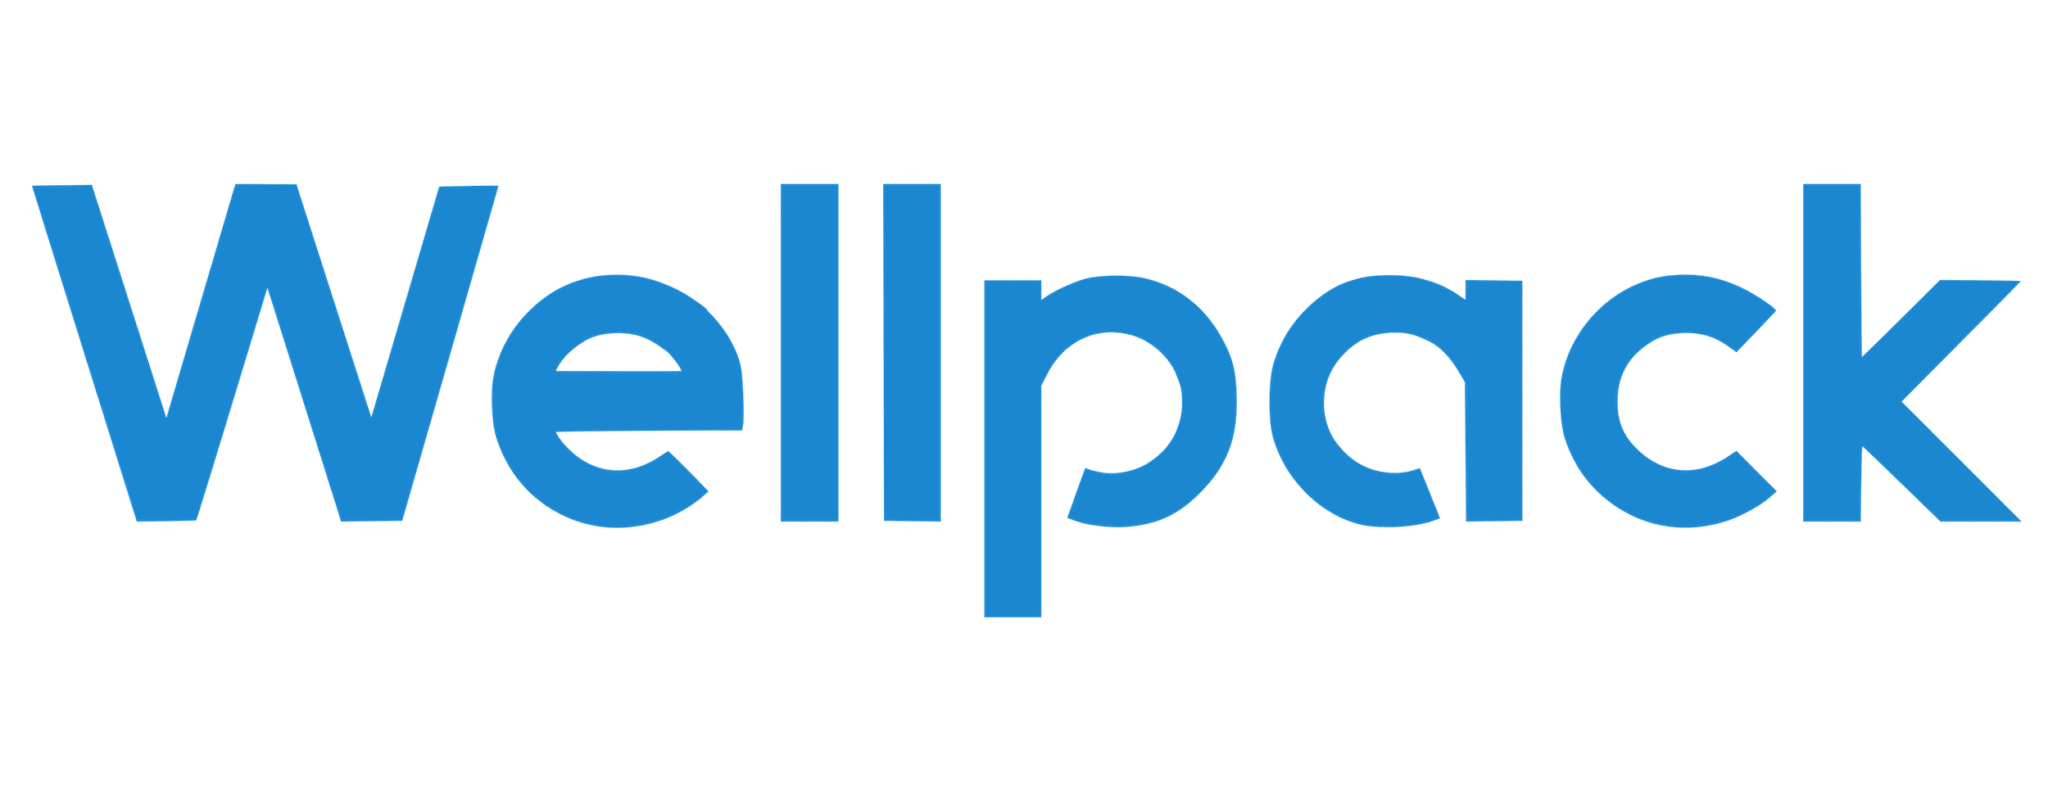 Wellpack-Oy-Logo-Sininen